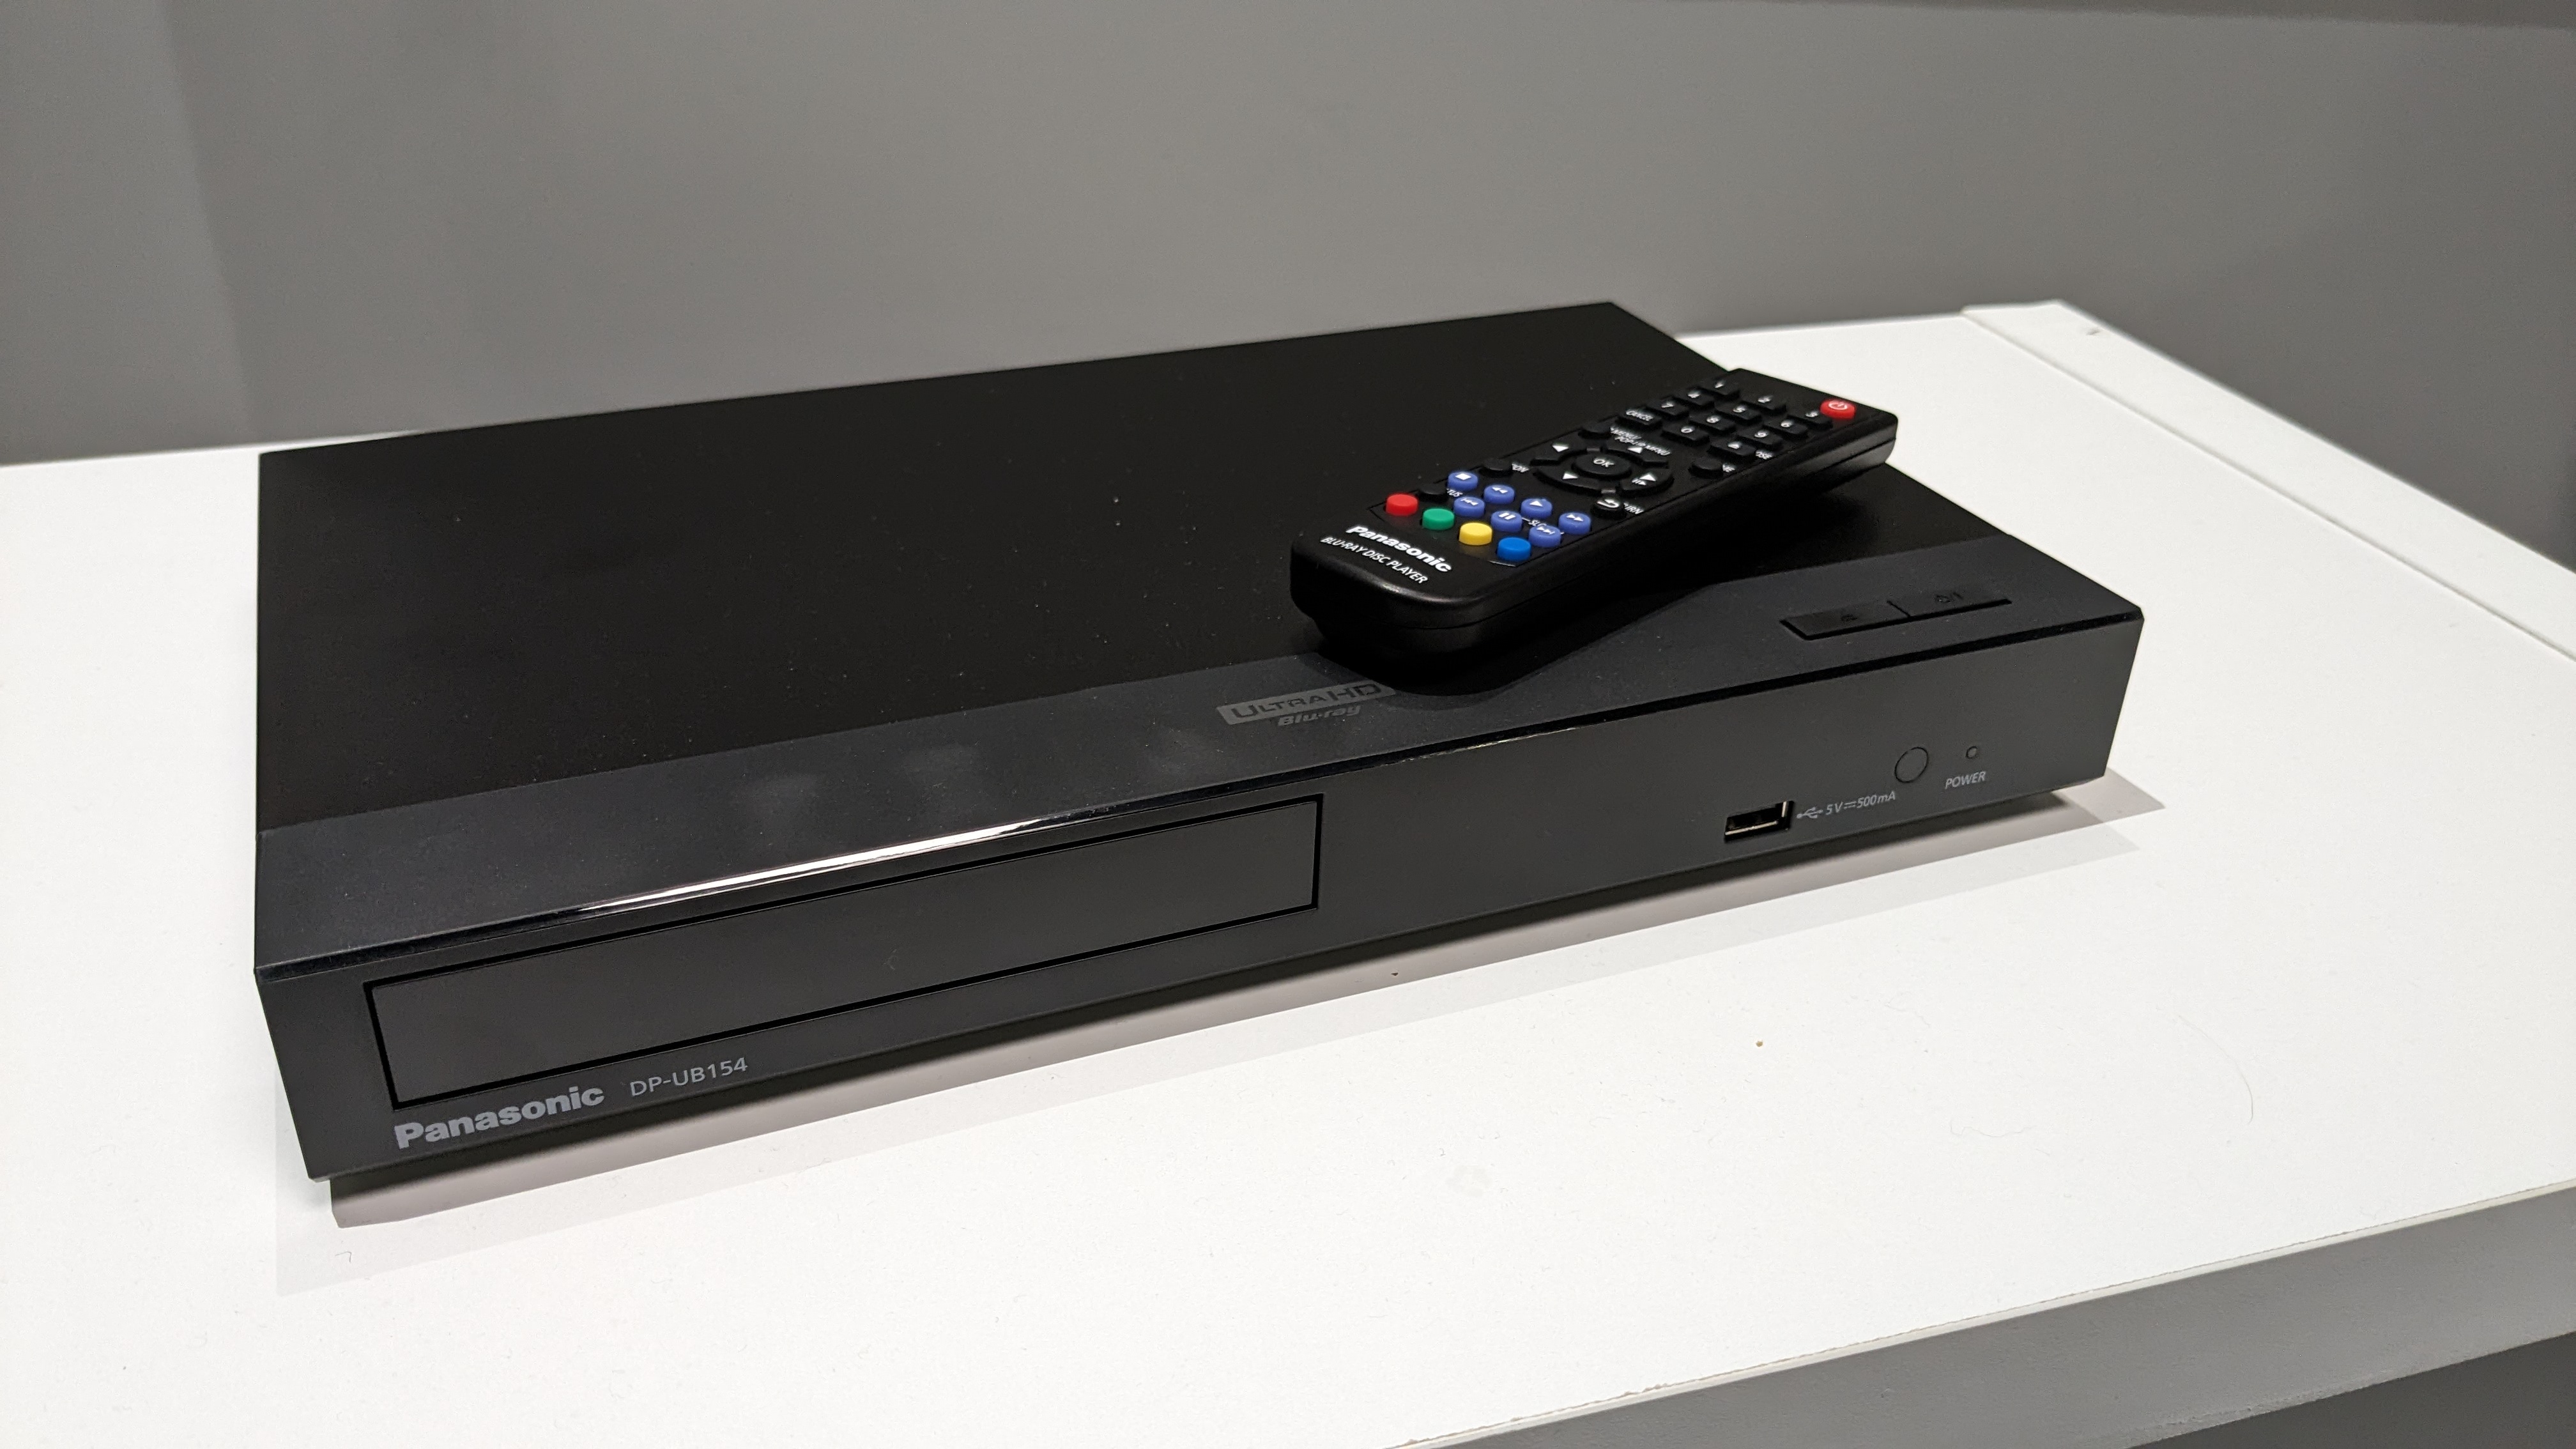 Panasonic DP-UB154 review: a cheap 4K Blu-ray player with great performance  | TechRadar